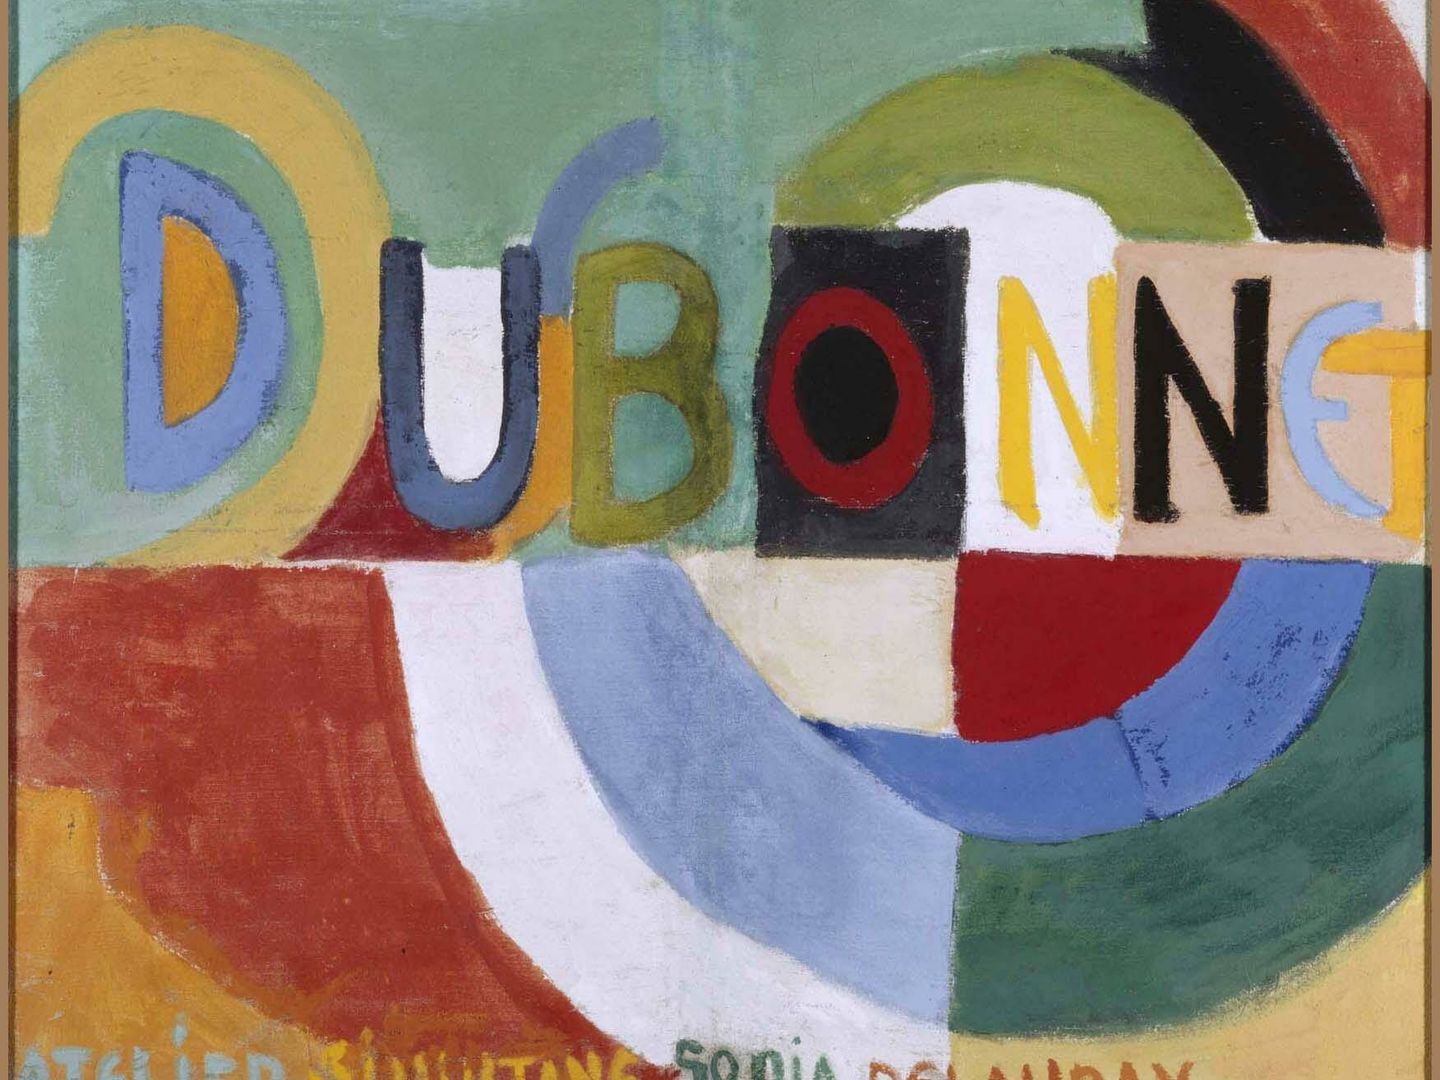 ‘Dubonnet’. Sonia Delaunay. 1914. MNCARS.